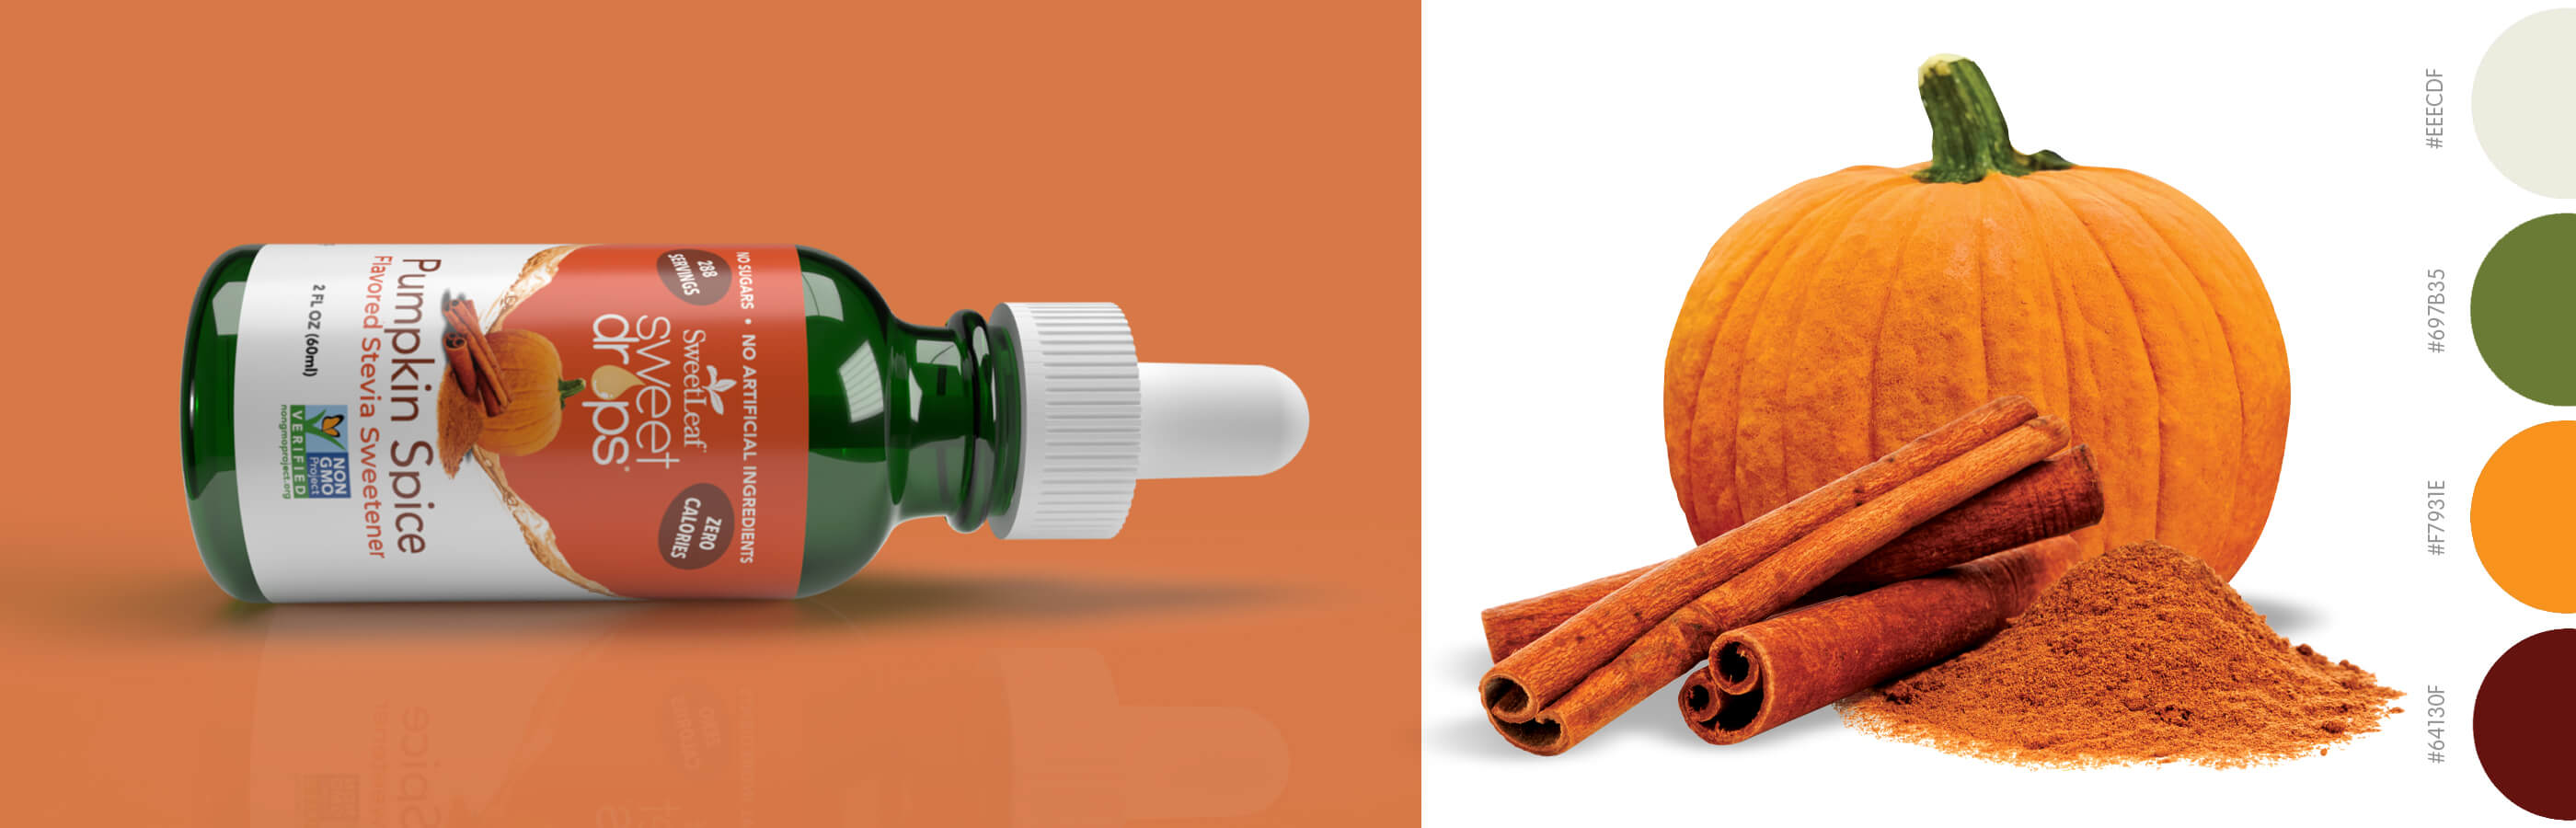 sweet drops pumpkin spice package design image